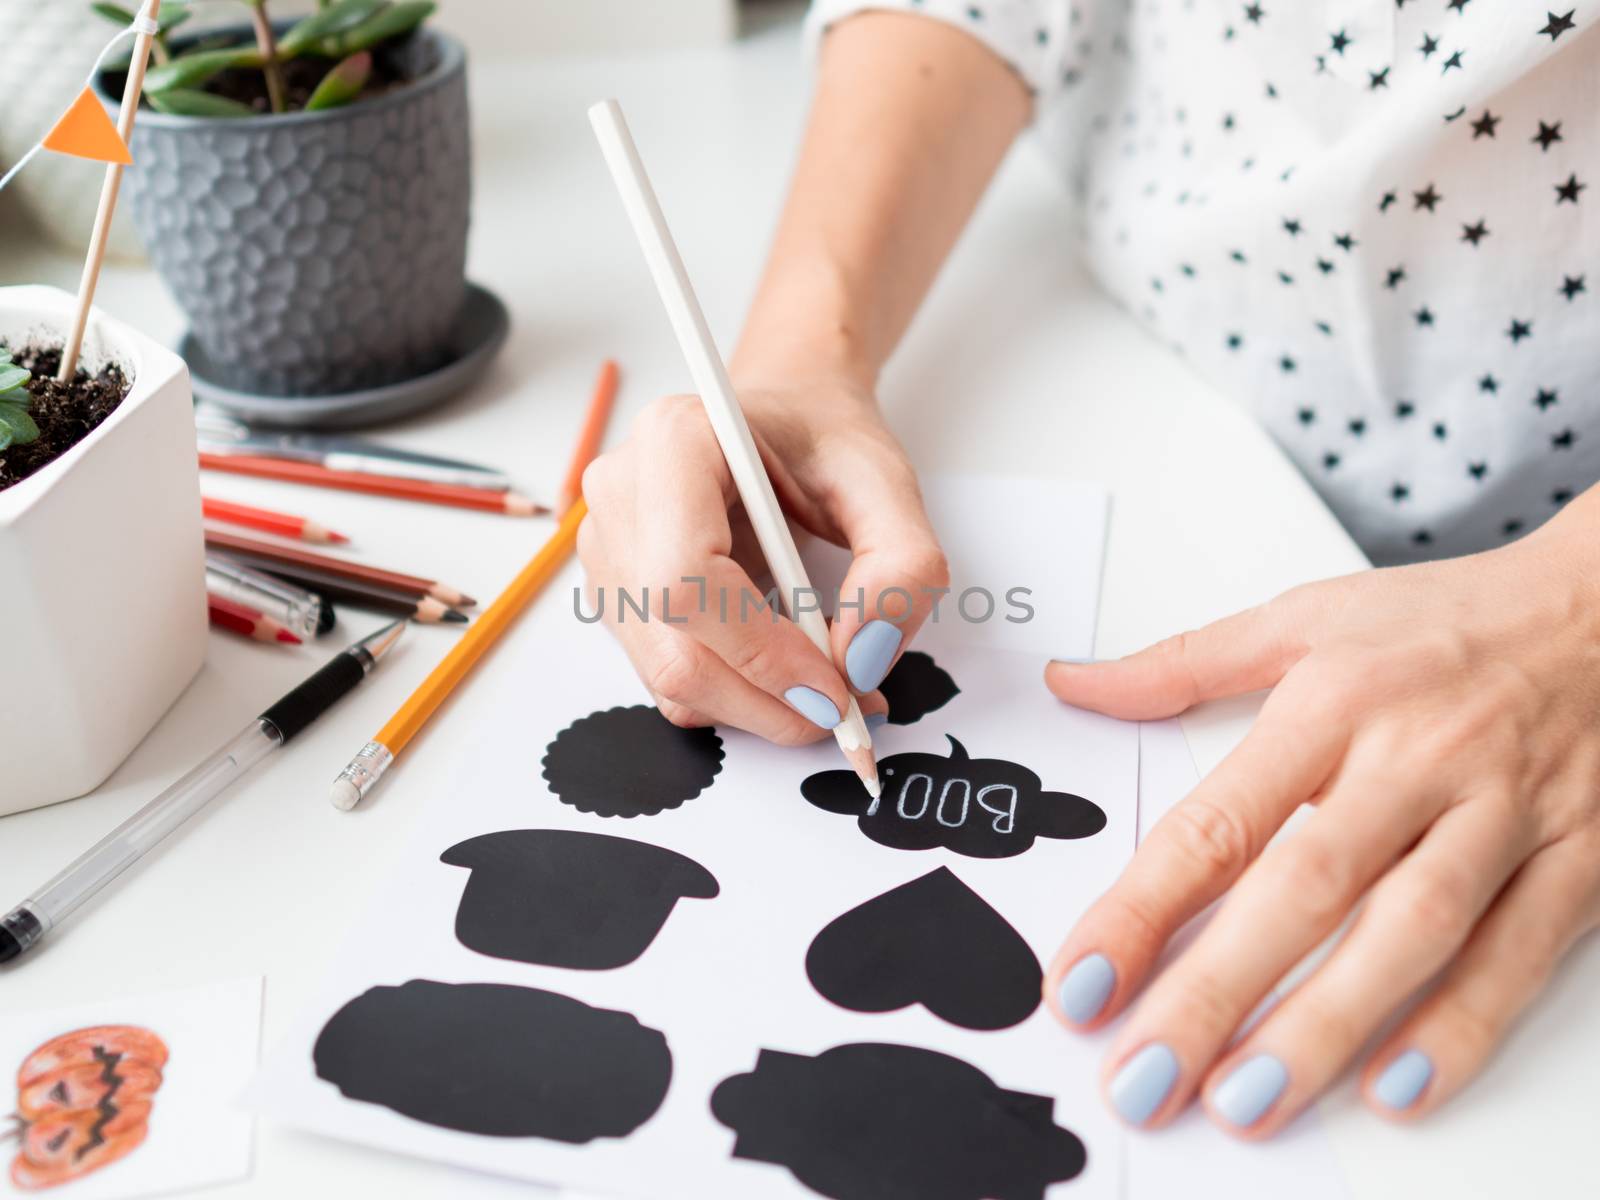 Woman writes Boo! on decorative black stickers for flower pots. by aksenovko